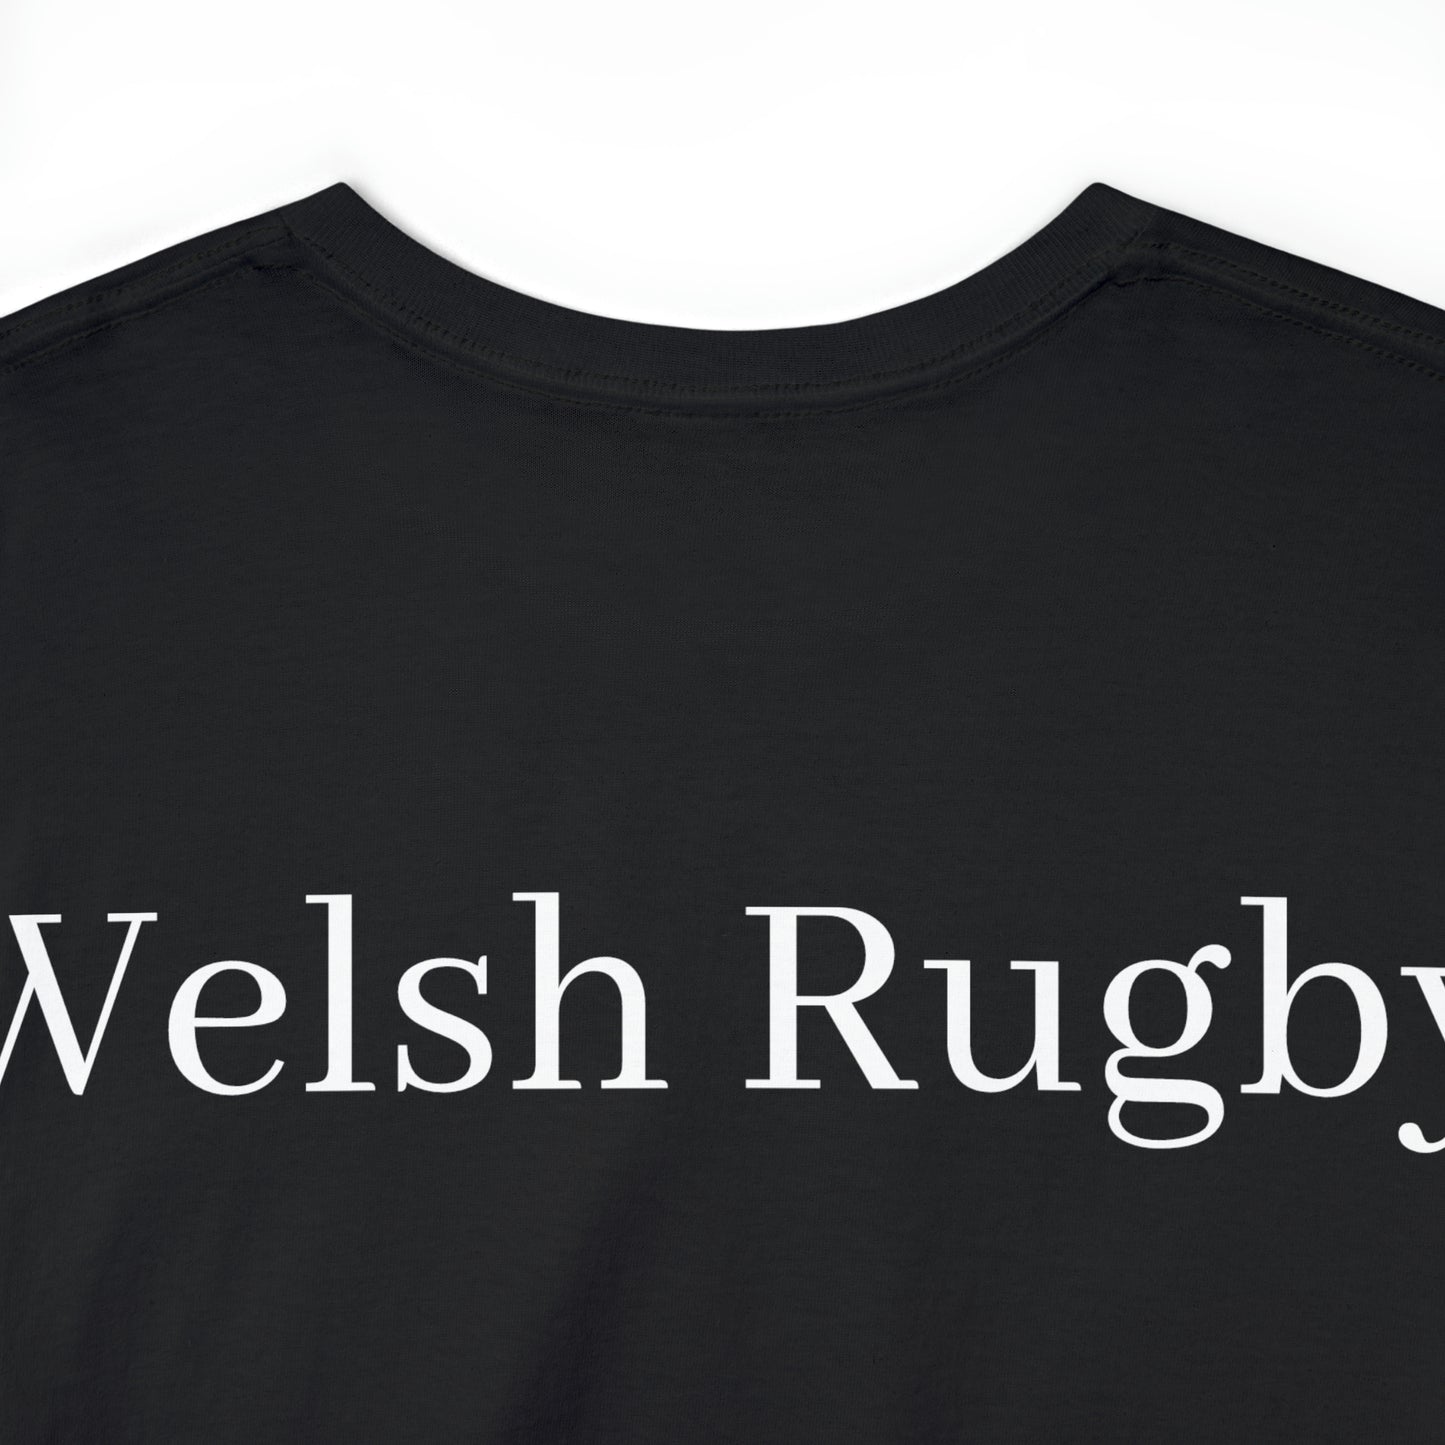 Post Match Wales - dark shirts